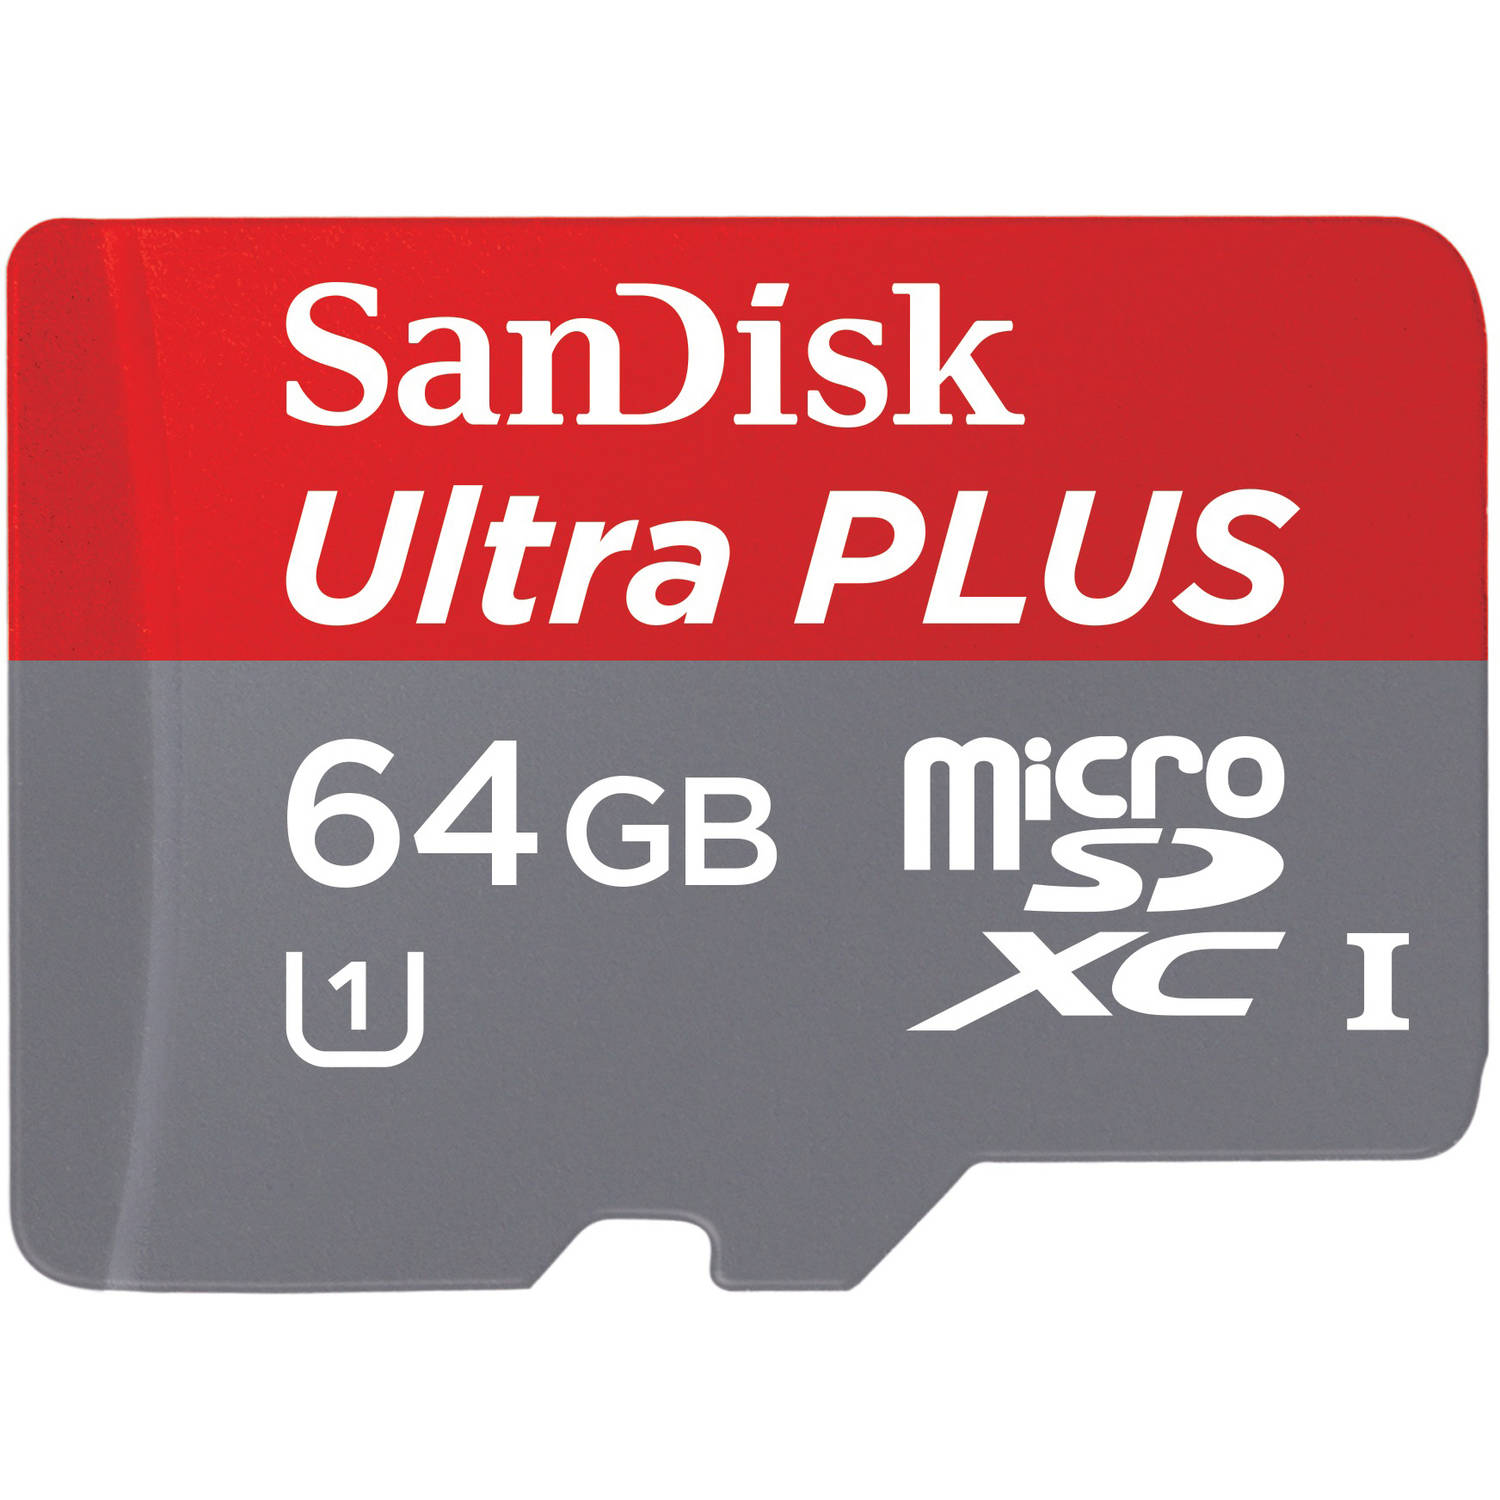 SanDisk Ultra PLUS 64GB microSD Card, Mobile, Class 10 - Walmart.com